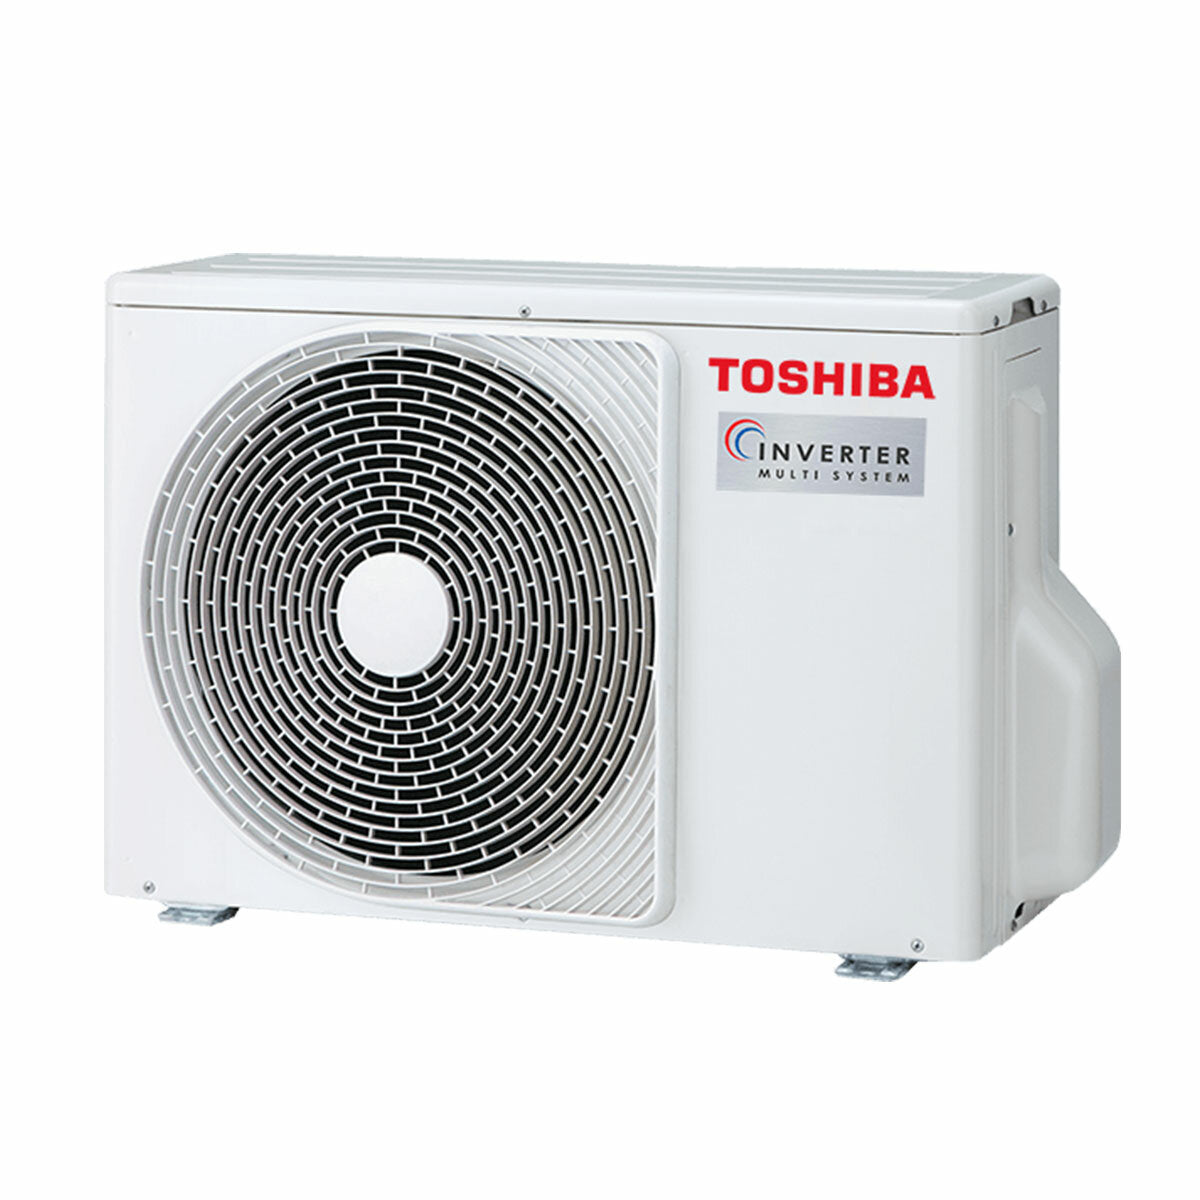 Toshiba ducted air conditioner U2 trial split 7000+9000+22000 BTU inverter A+++ external unit 7 kW